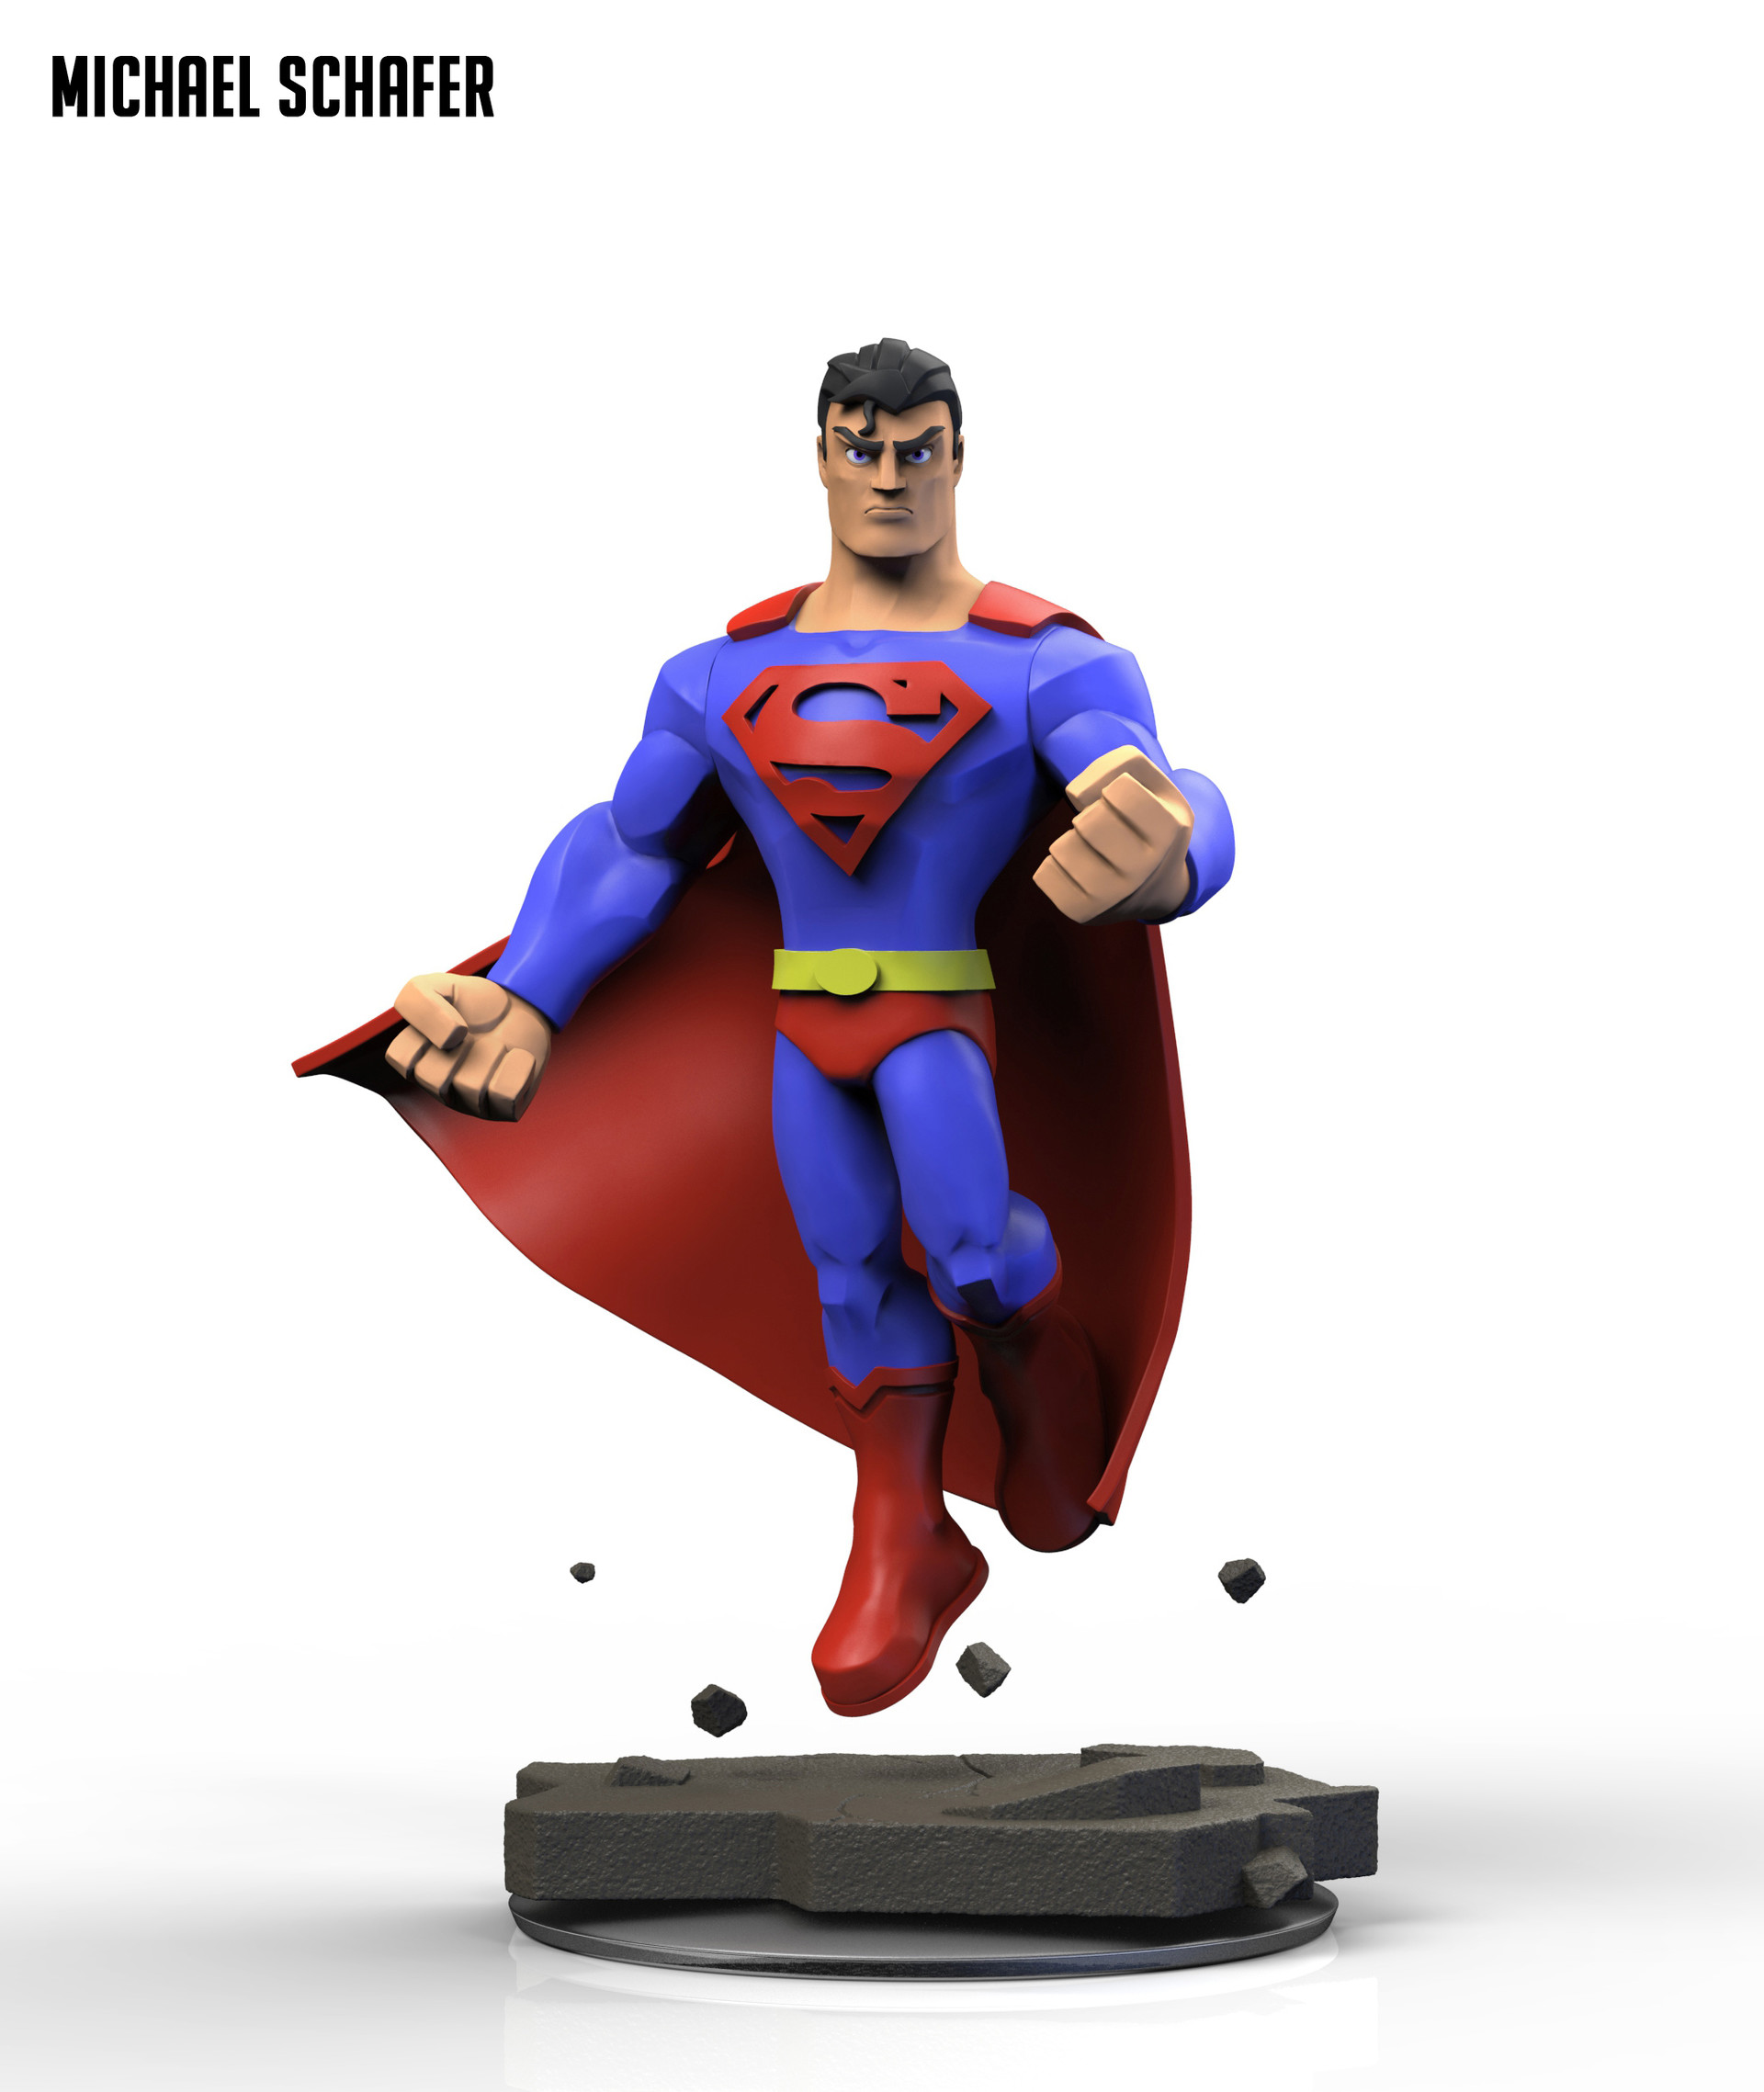 michael-schafer-superman-resize-1.jpg